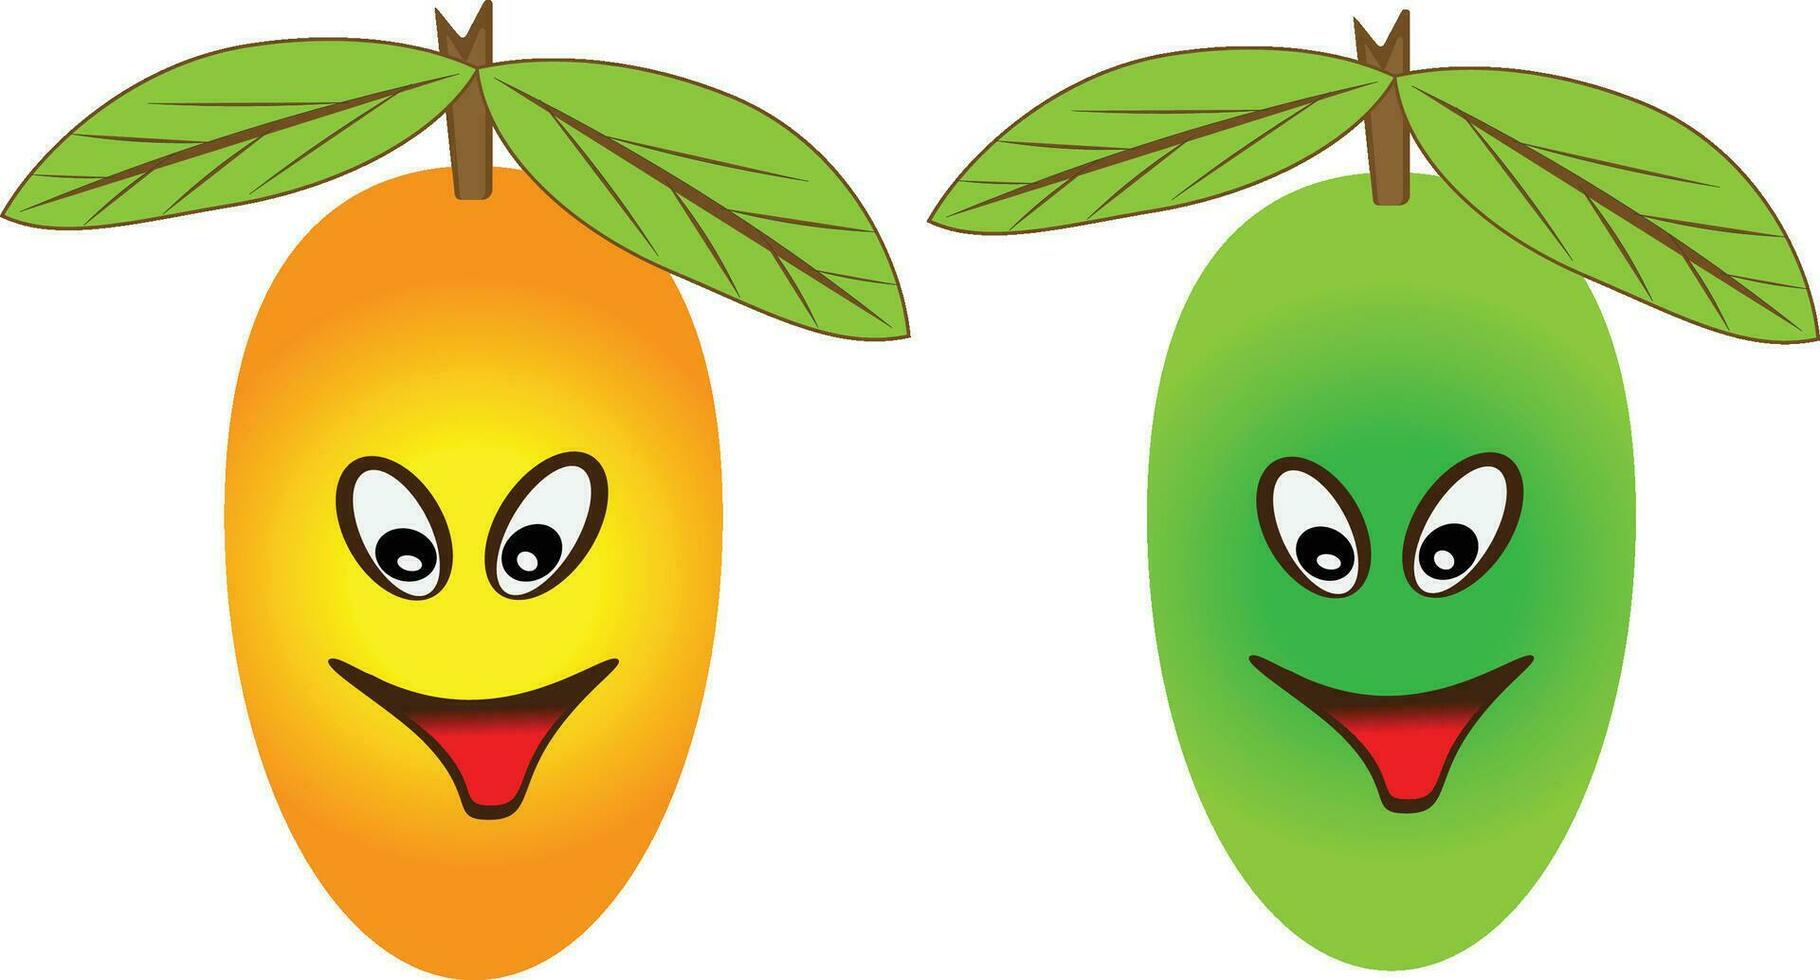 Fruits in cartoon style. Fruits vector art.